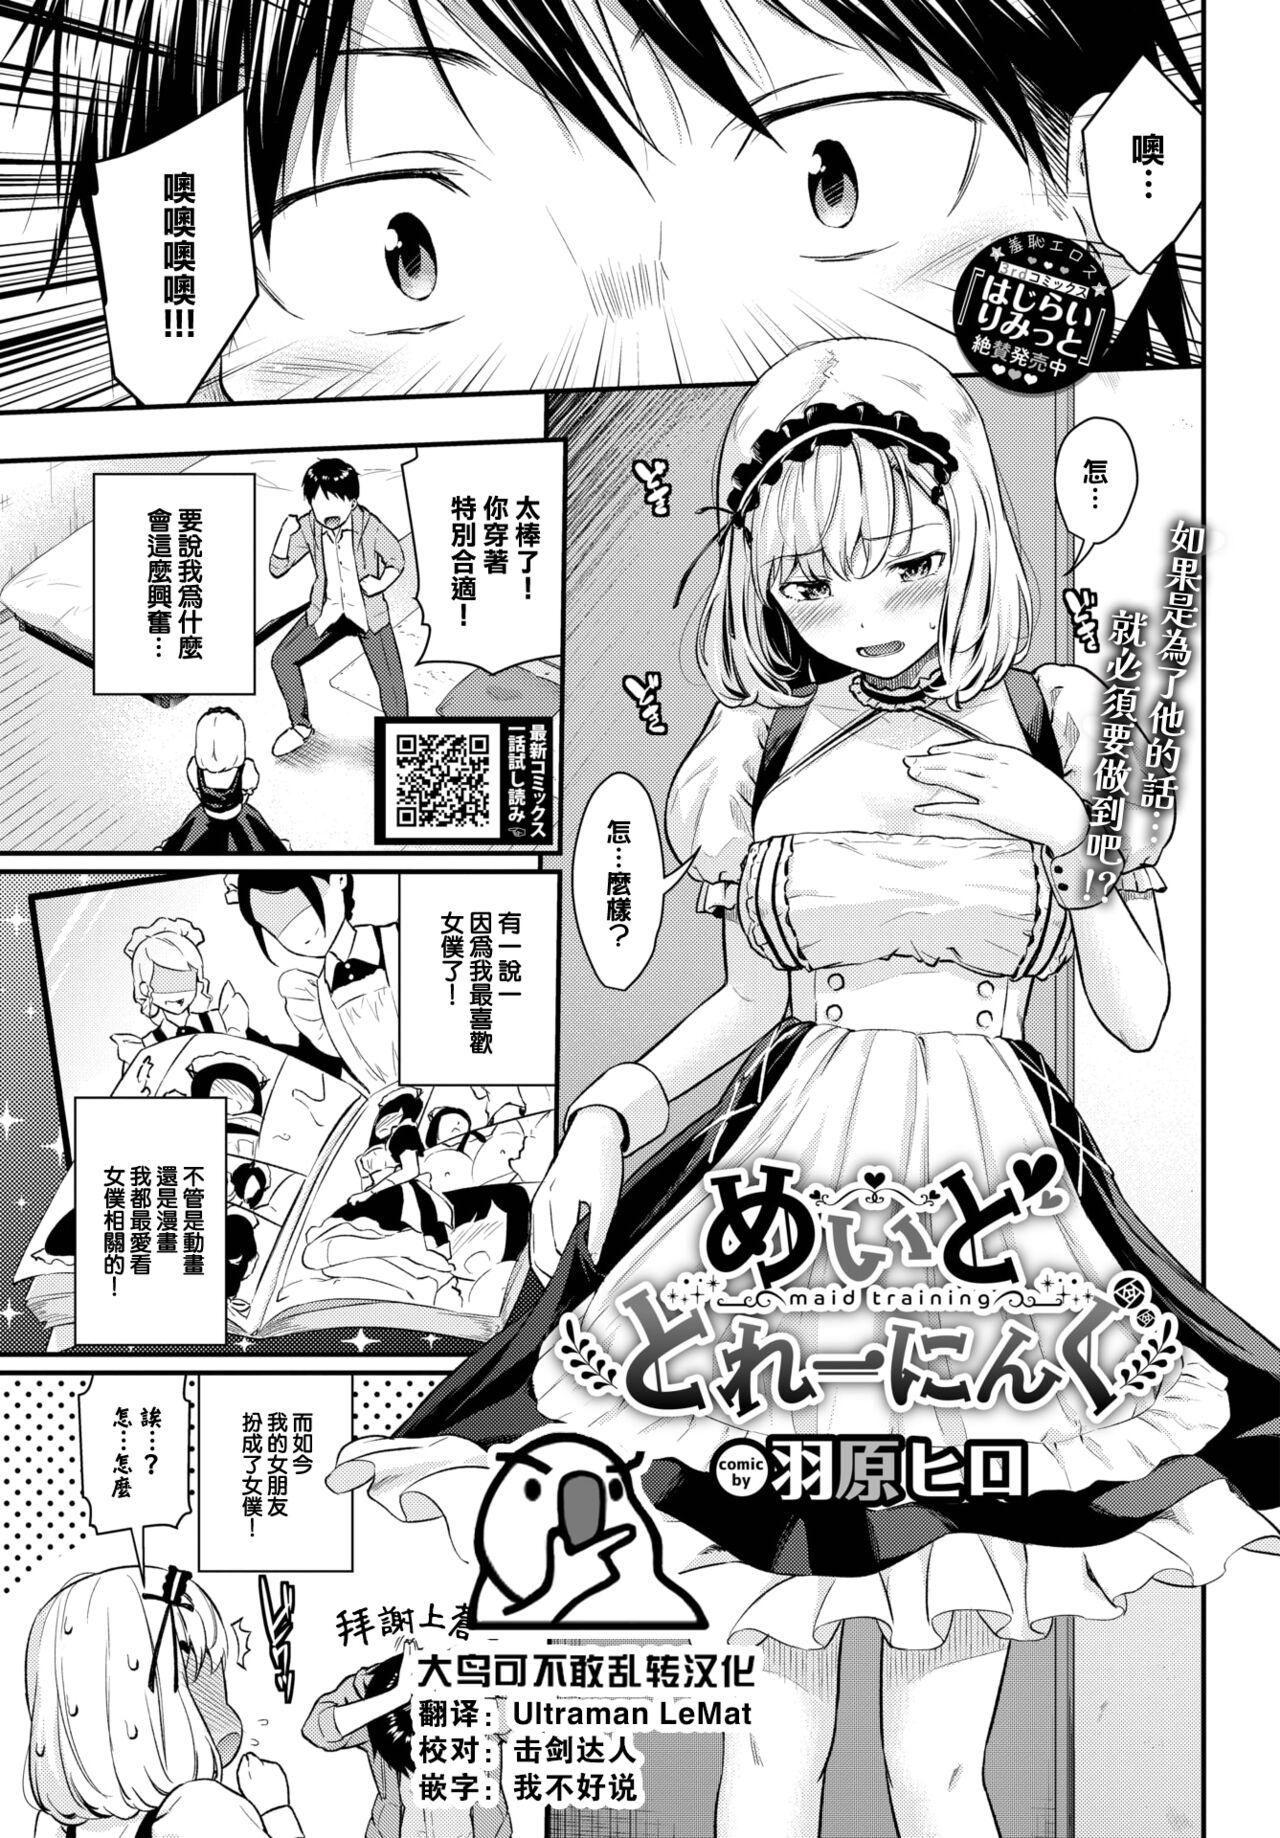 Sapphic Maid Training Cheat - Page 1